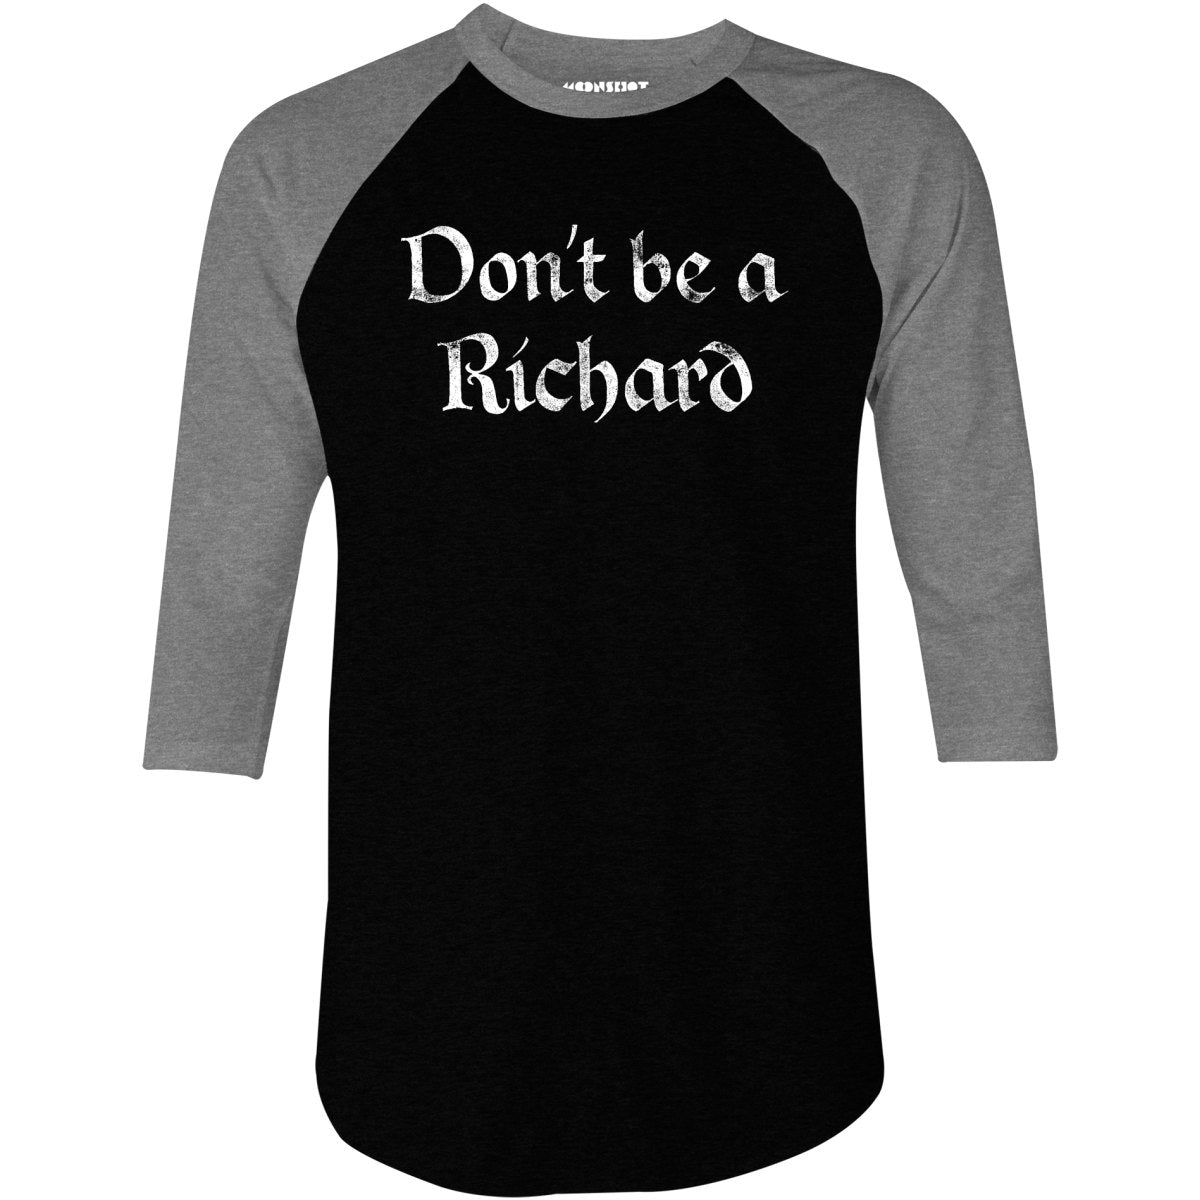 Don't Be a Richard - 3/4 Sleeve Raglan T-Shirt